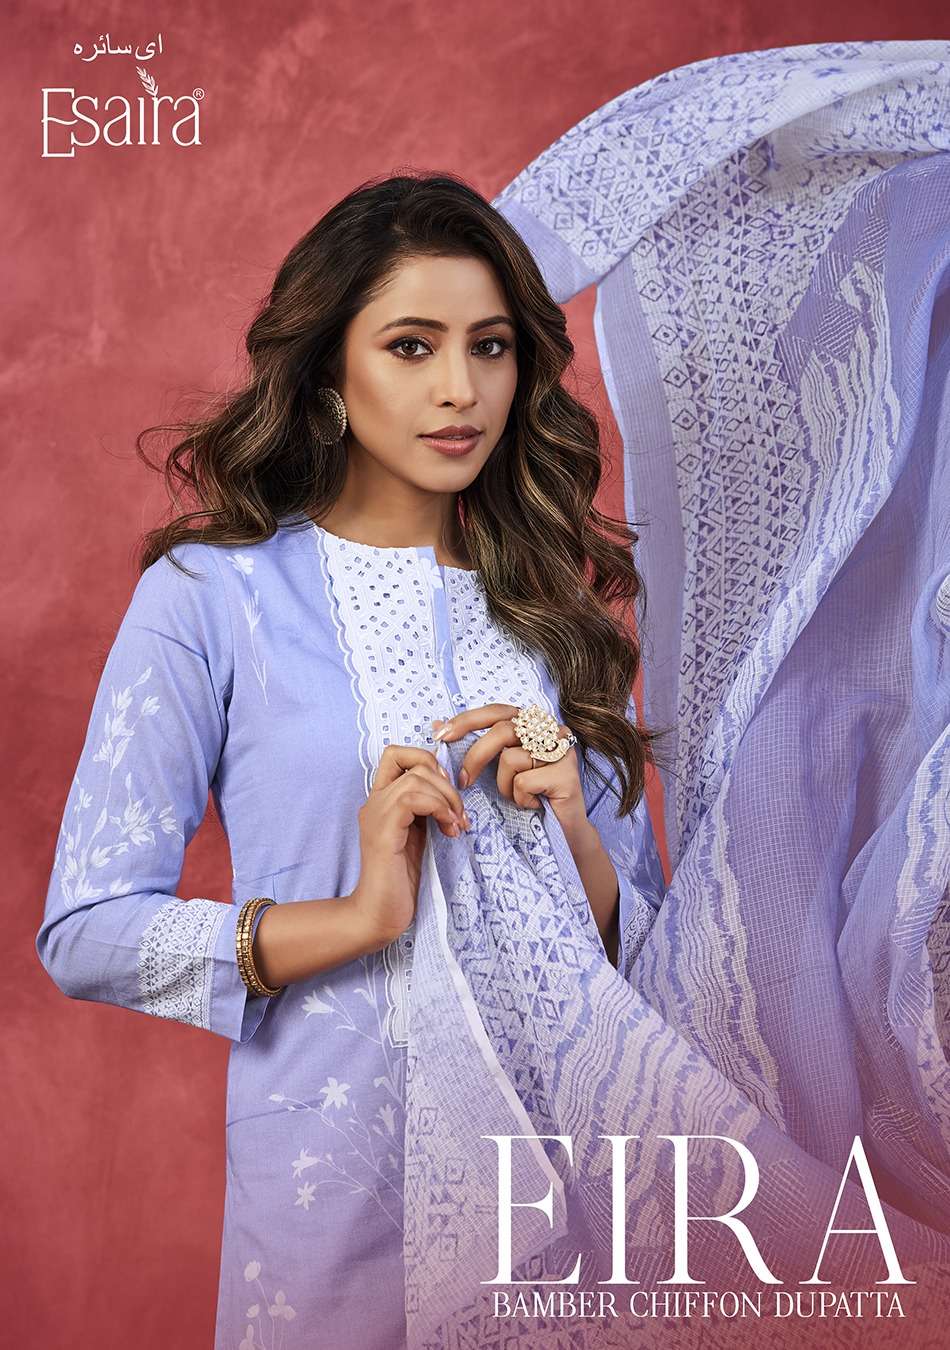 Esaira Eira Fancy Cambric Cotton Fashion Salwar Kameez Designs